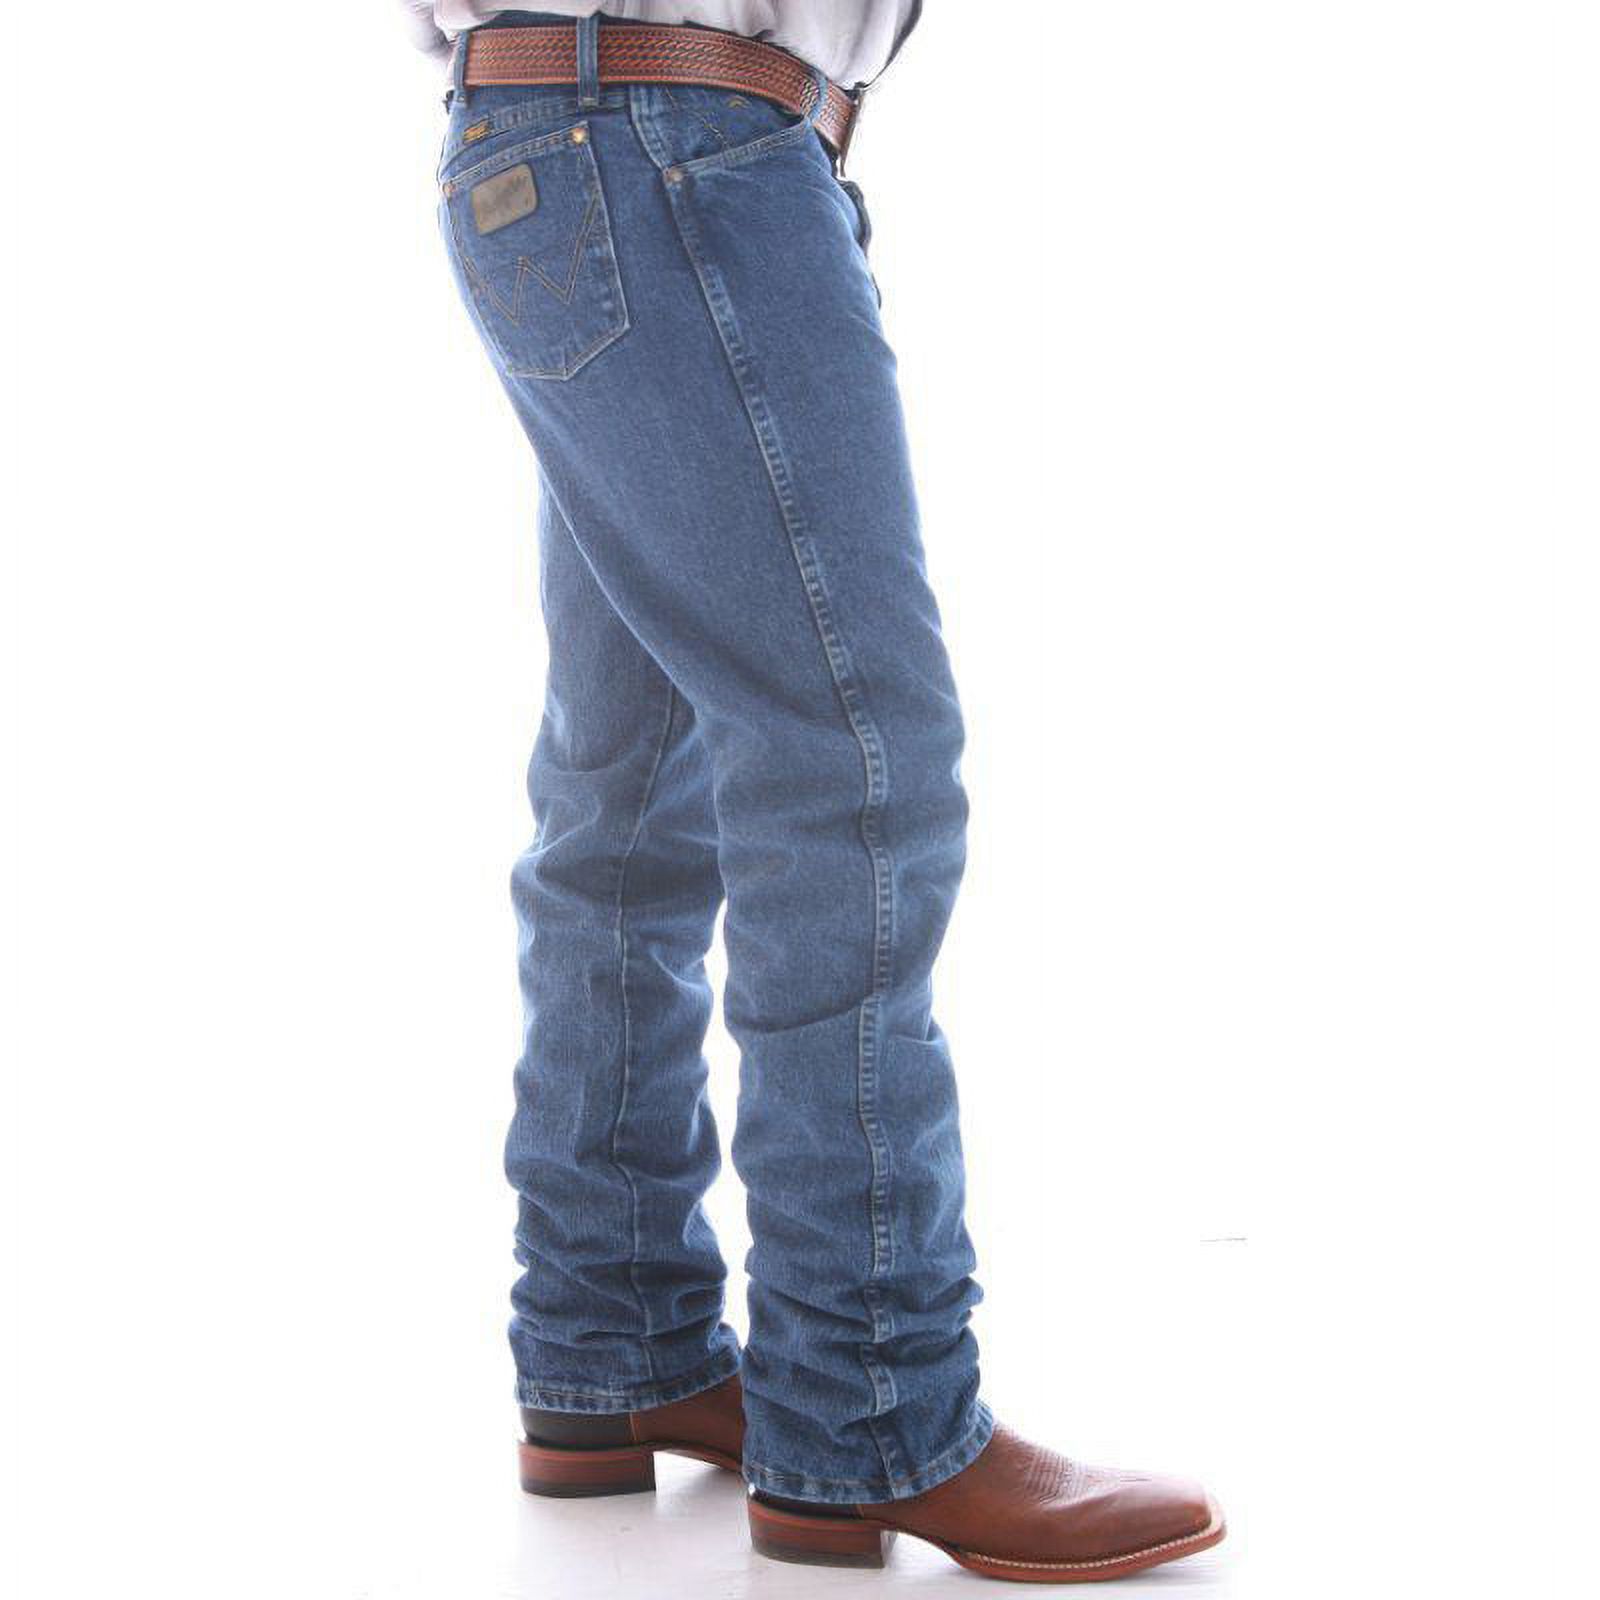 Wrangler George Strait Regular Fit - Mens Jeans  - 13Mgshd - image 4 of 4